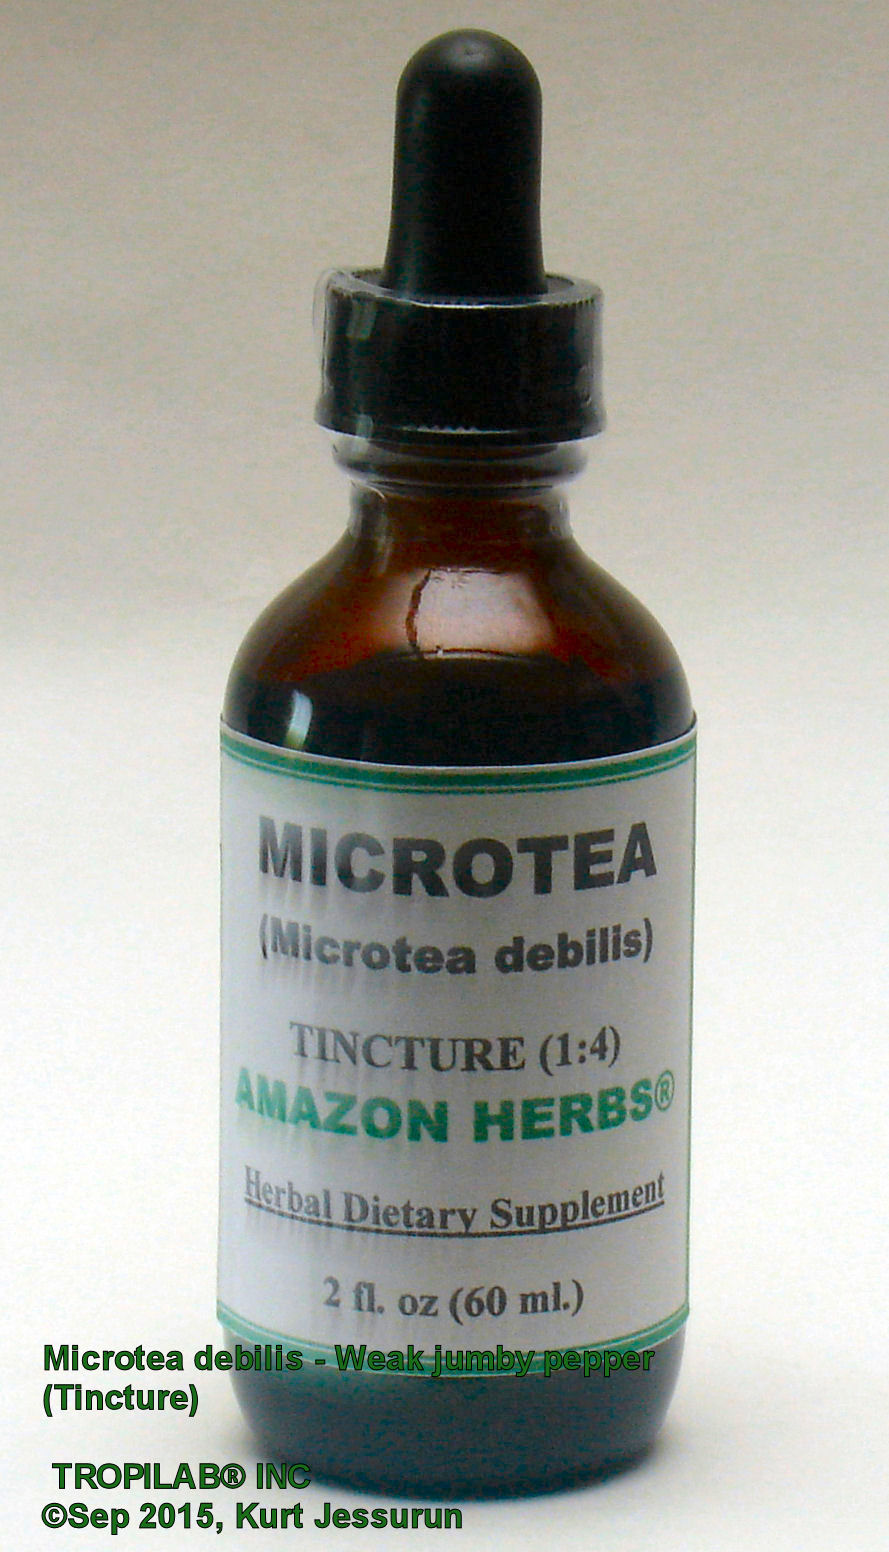 Microtea debilis (Weak jumby pepper, Eiwit) - Tropilab tincture